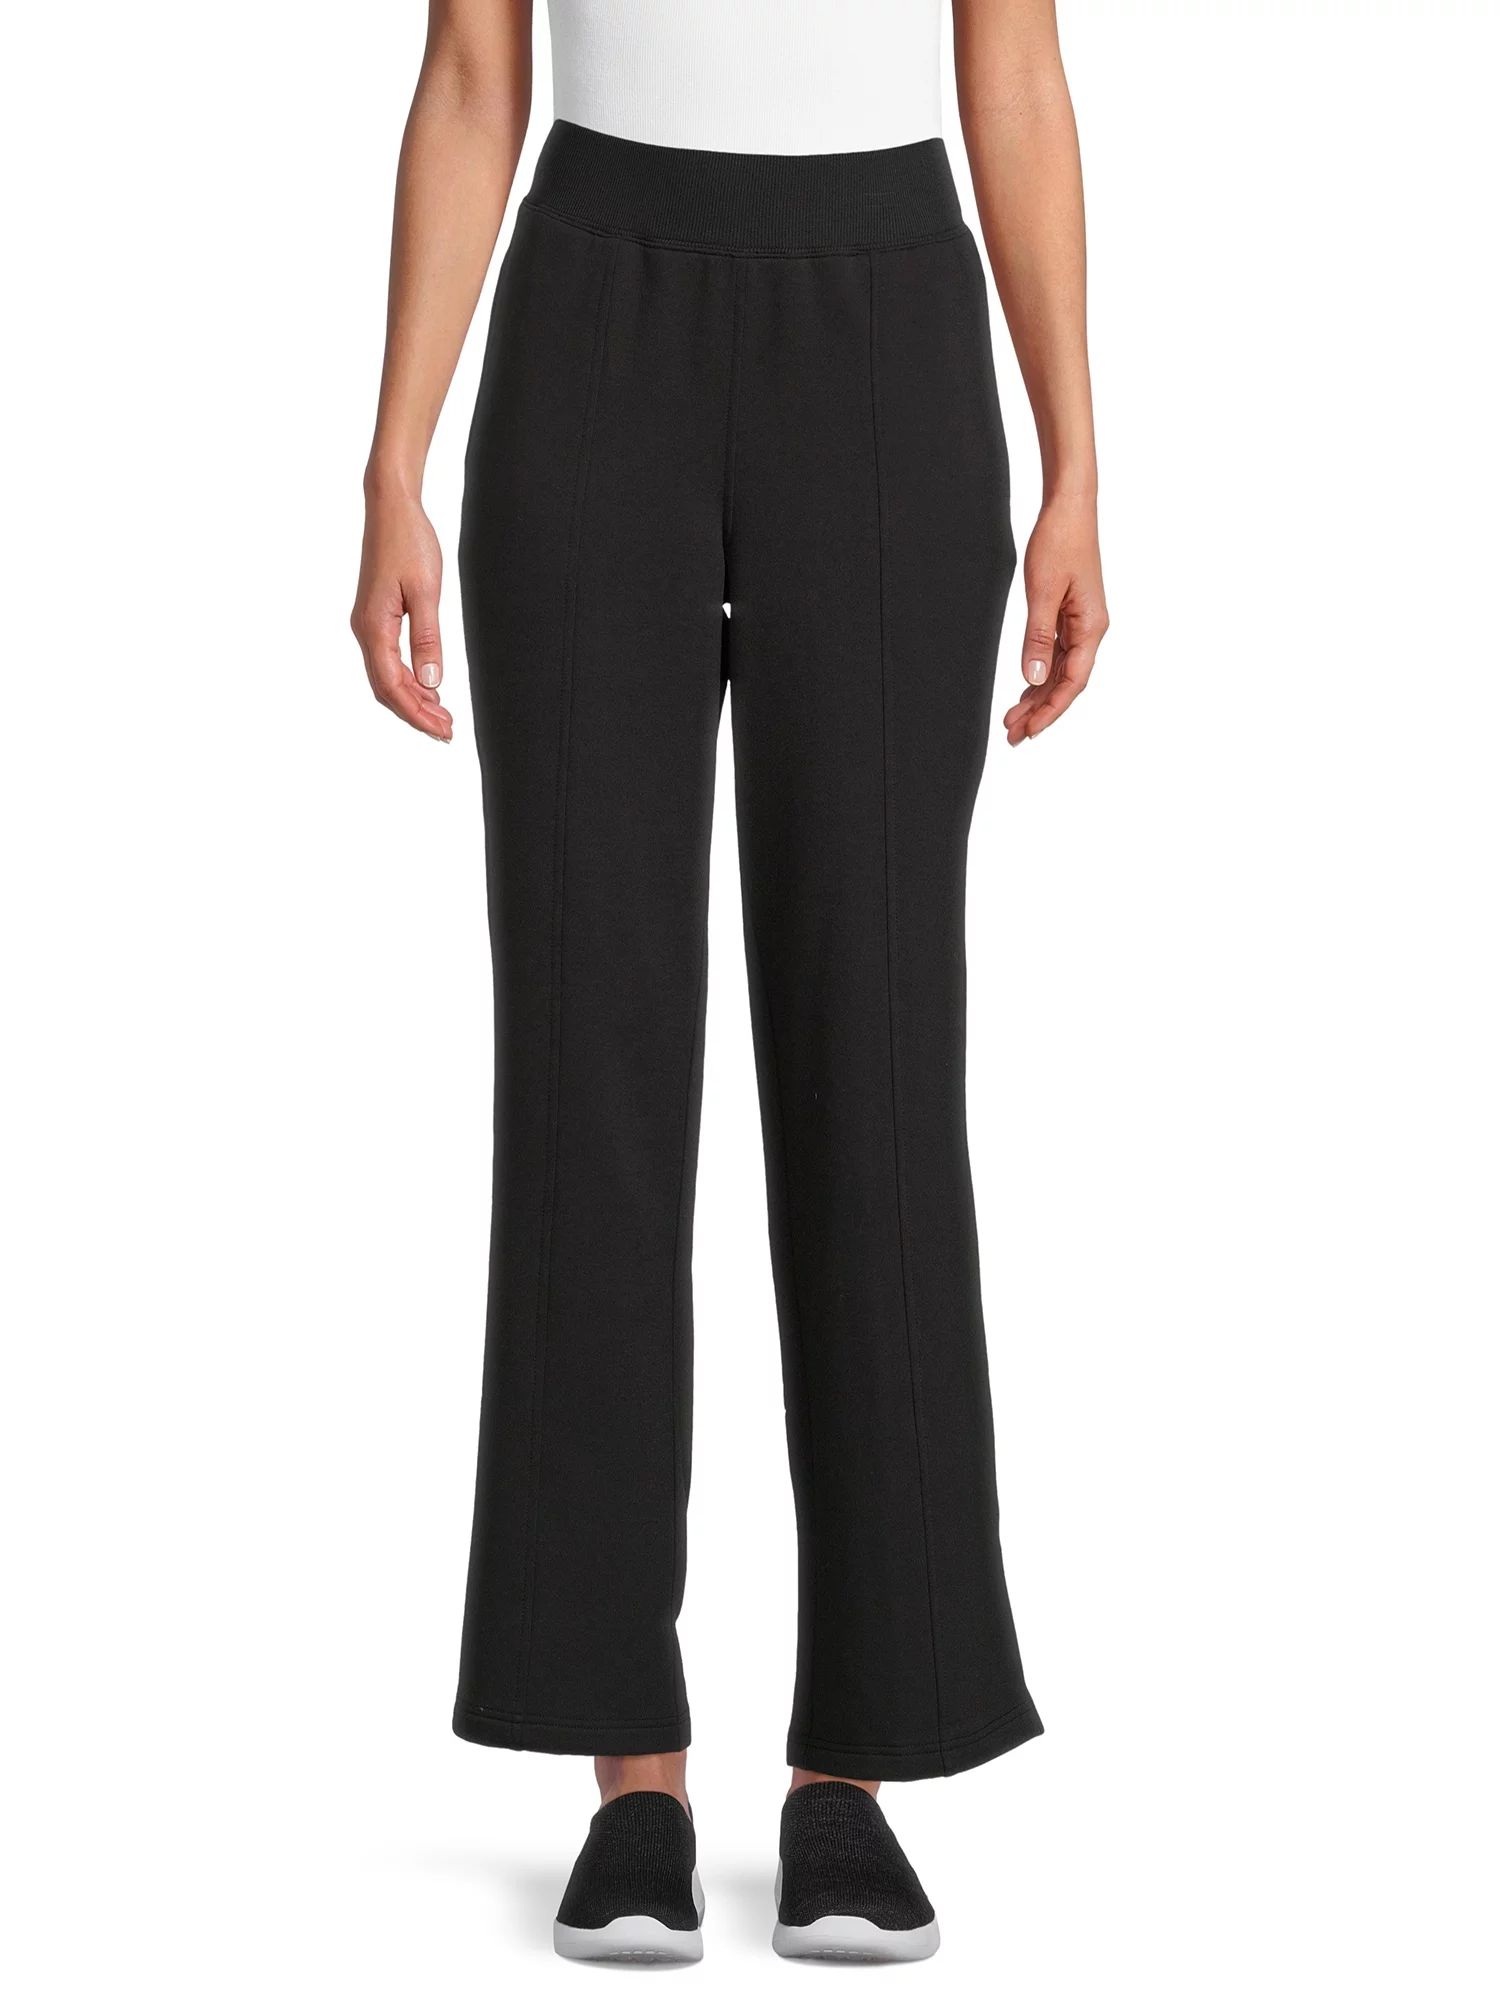 Avia Women’s Athleisure Plush Fleece Pants, 31" Inseam, Sizes XS-3XL | Walmart (US)